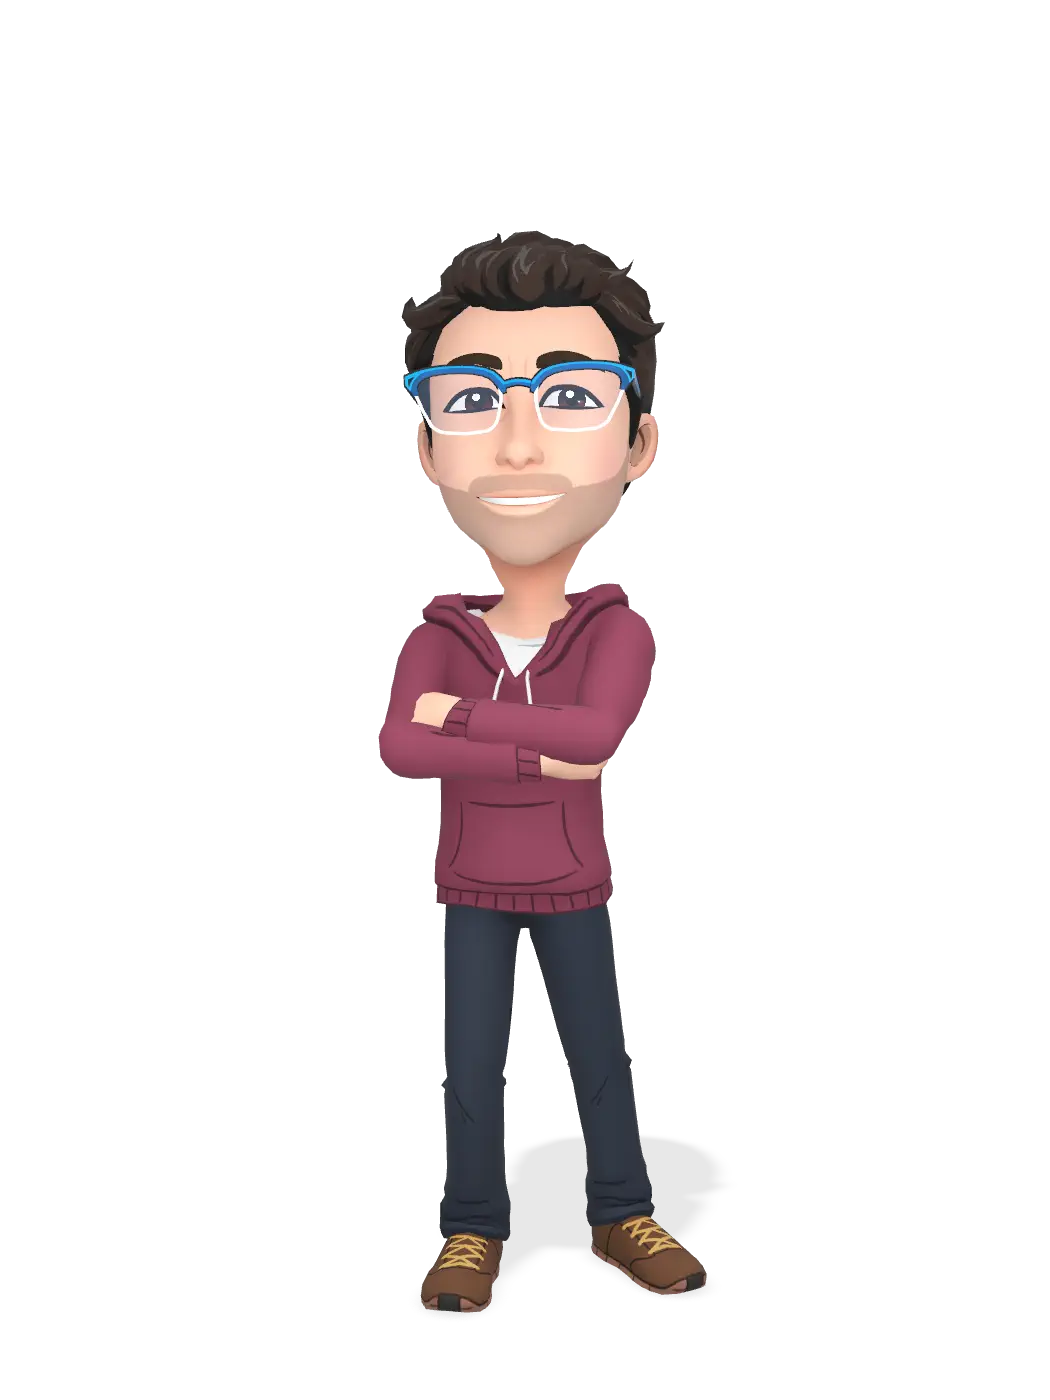 3D Bitmoji for wifipunk avatar